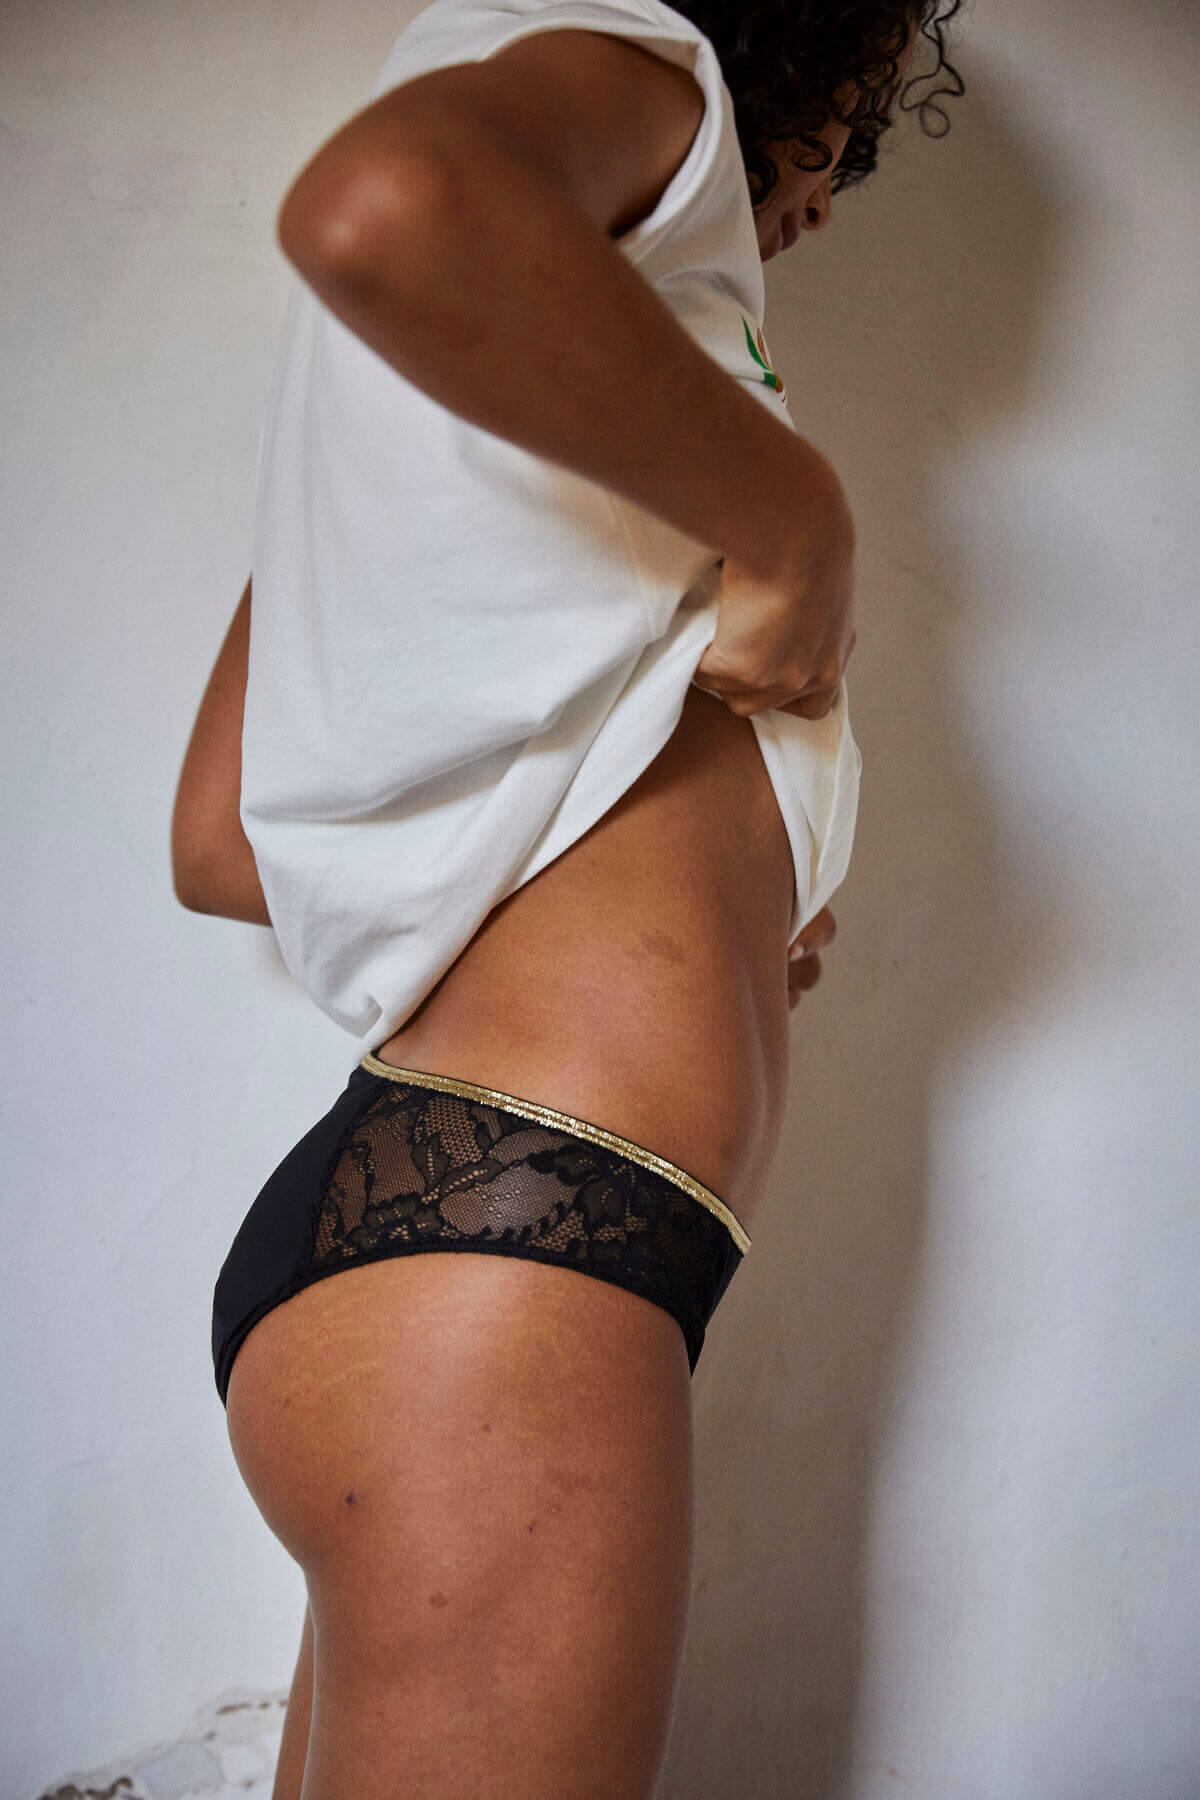 christina daniells add photo girls changing panties